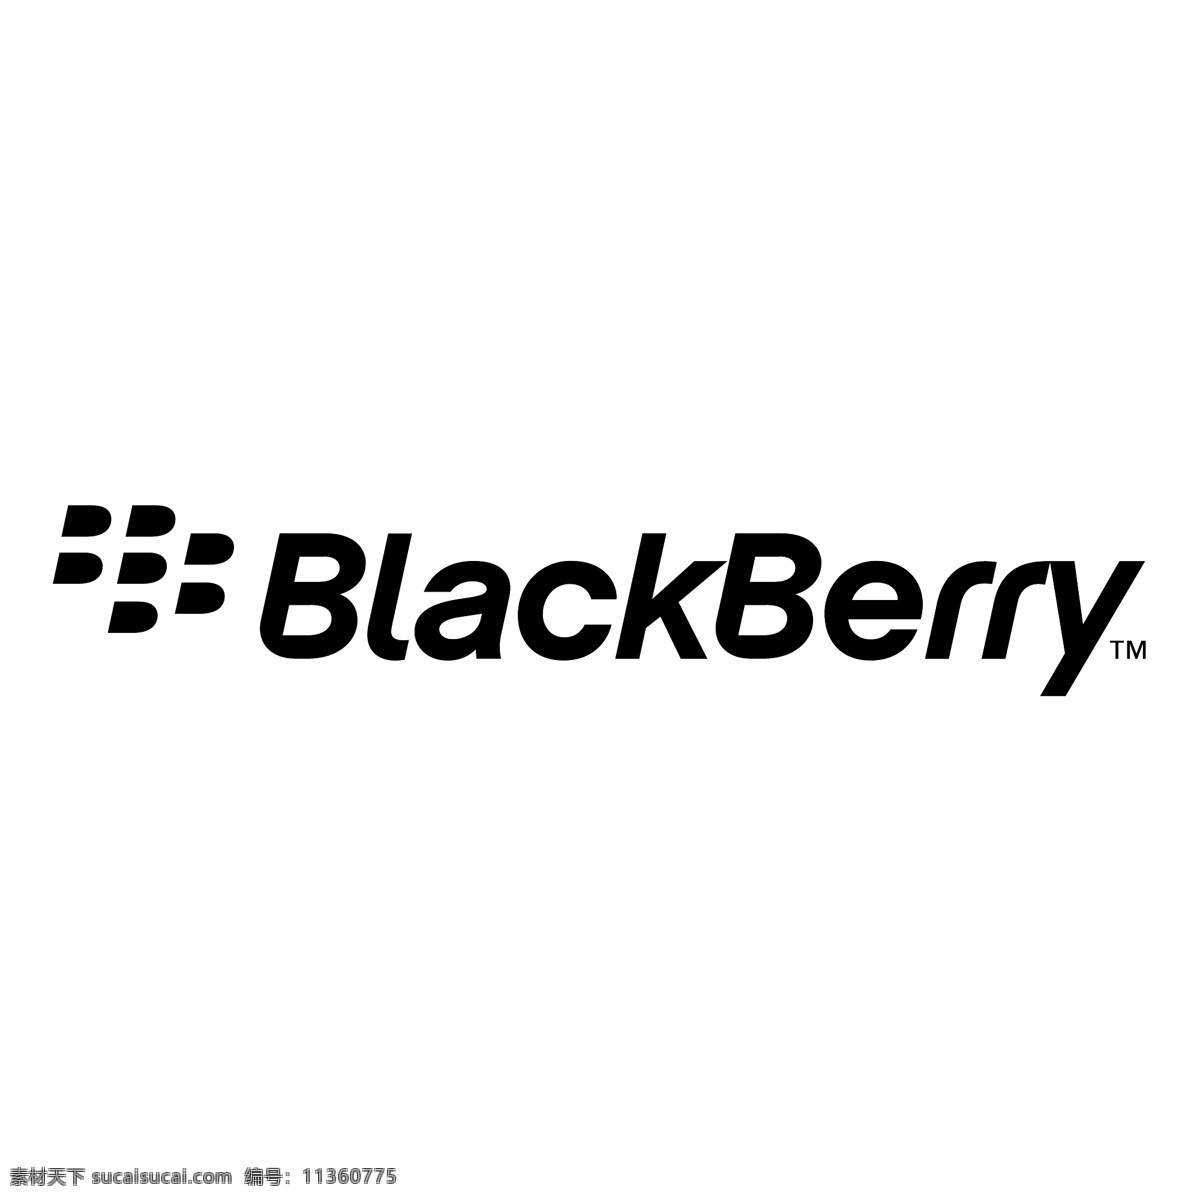 blackberry 黑 莓 手机 标志 矢量图 黑莓手机